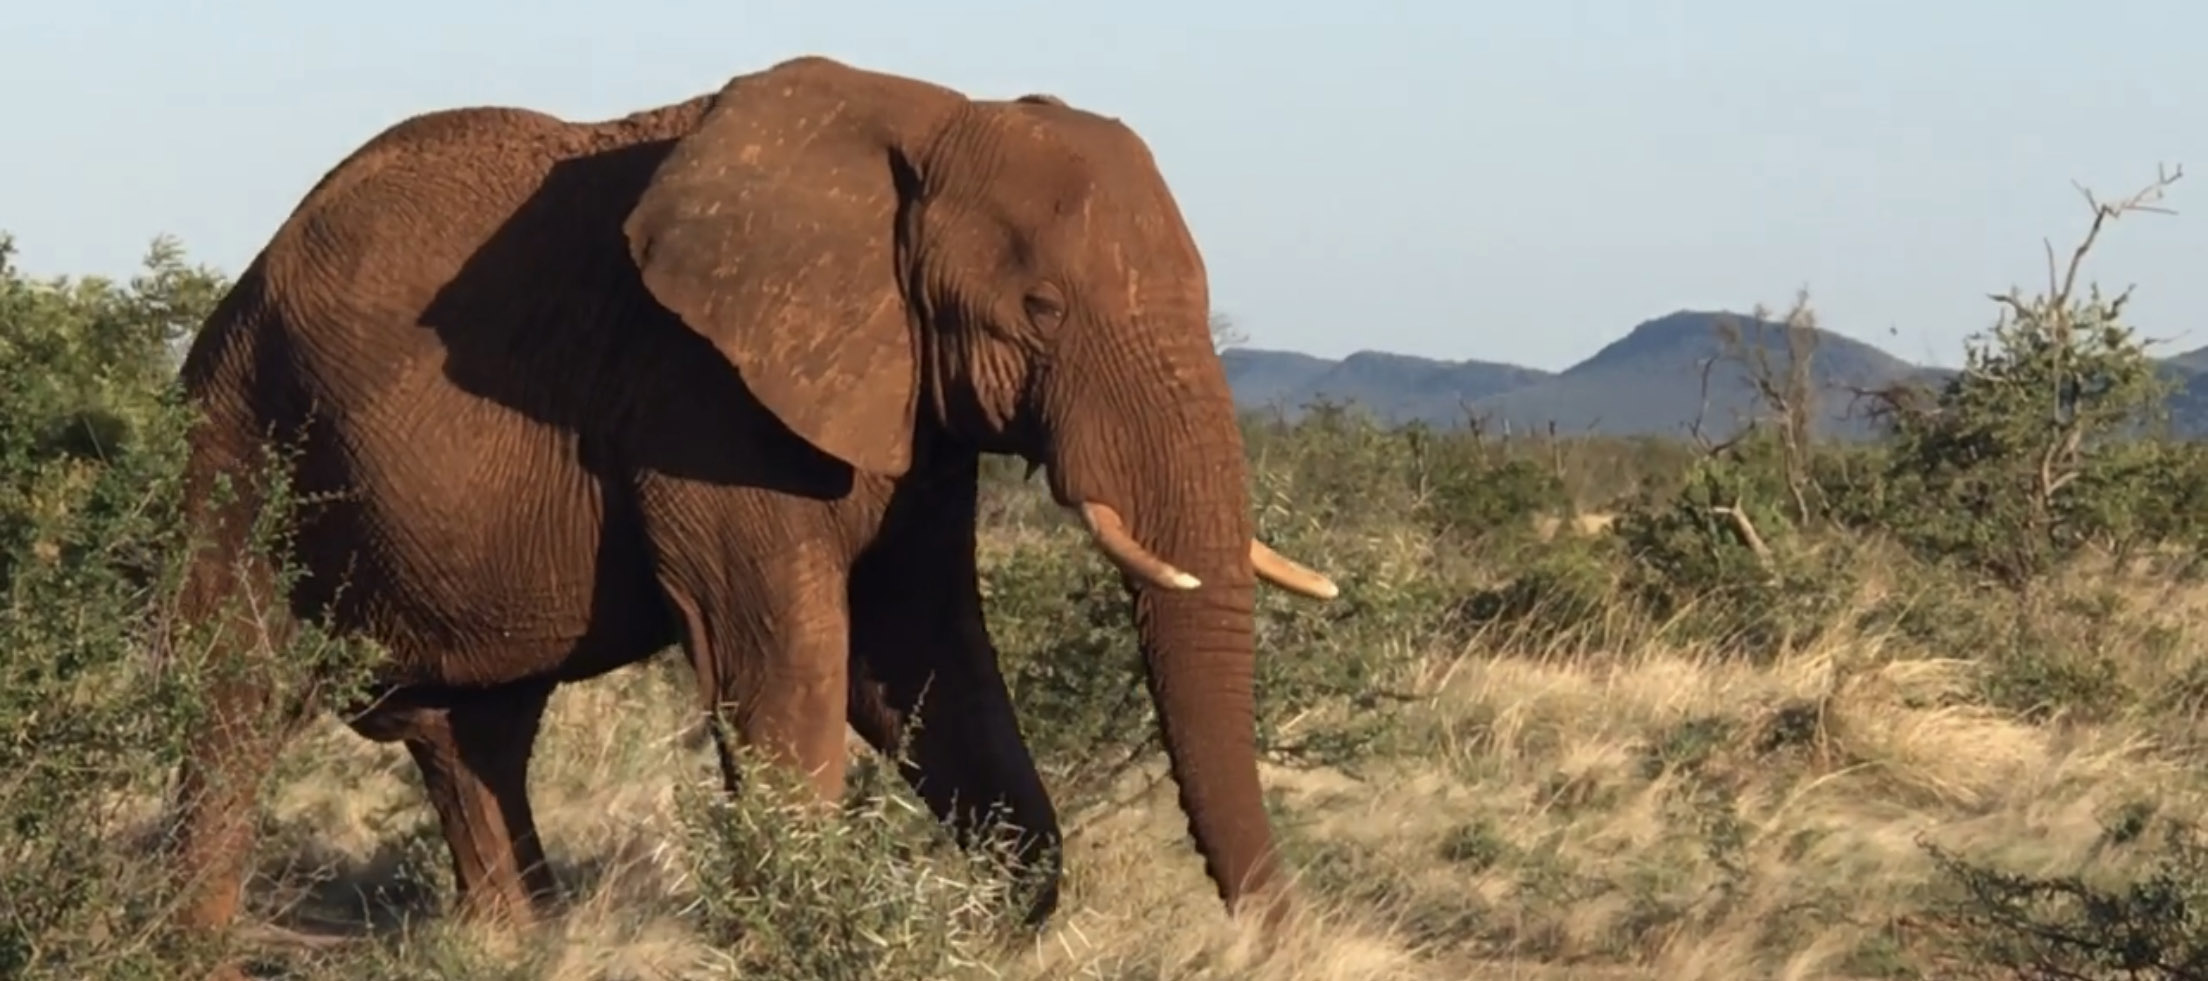 Safari With Elephants